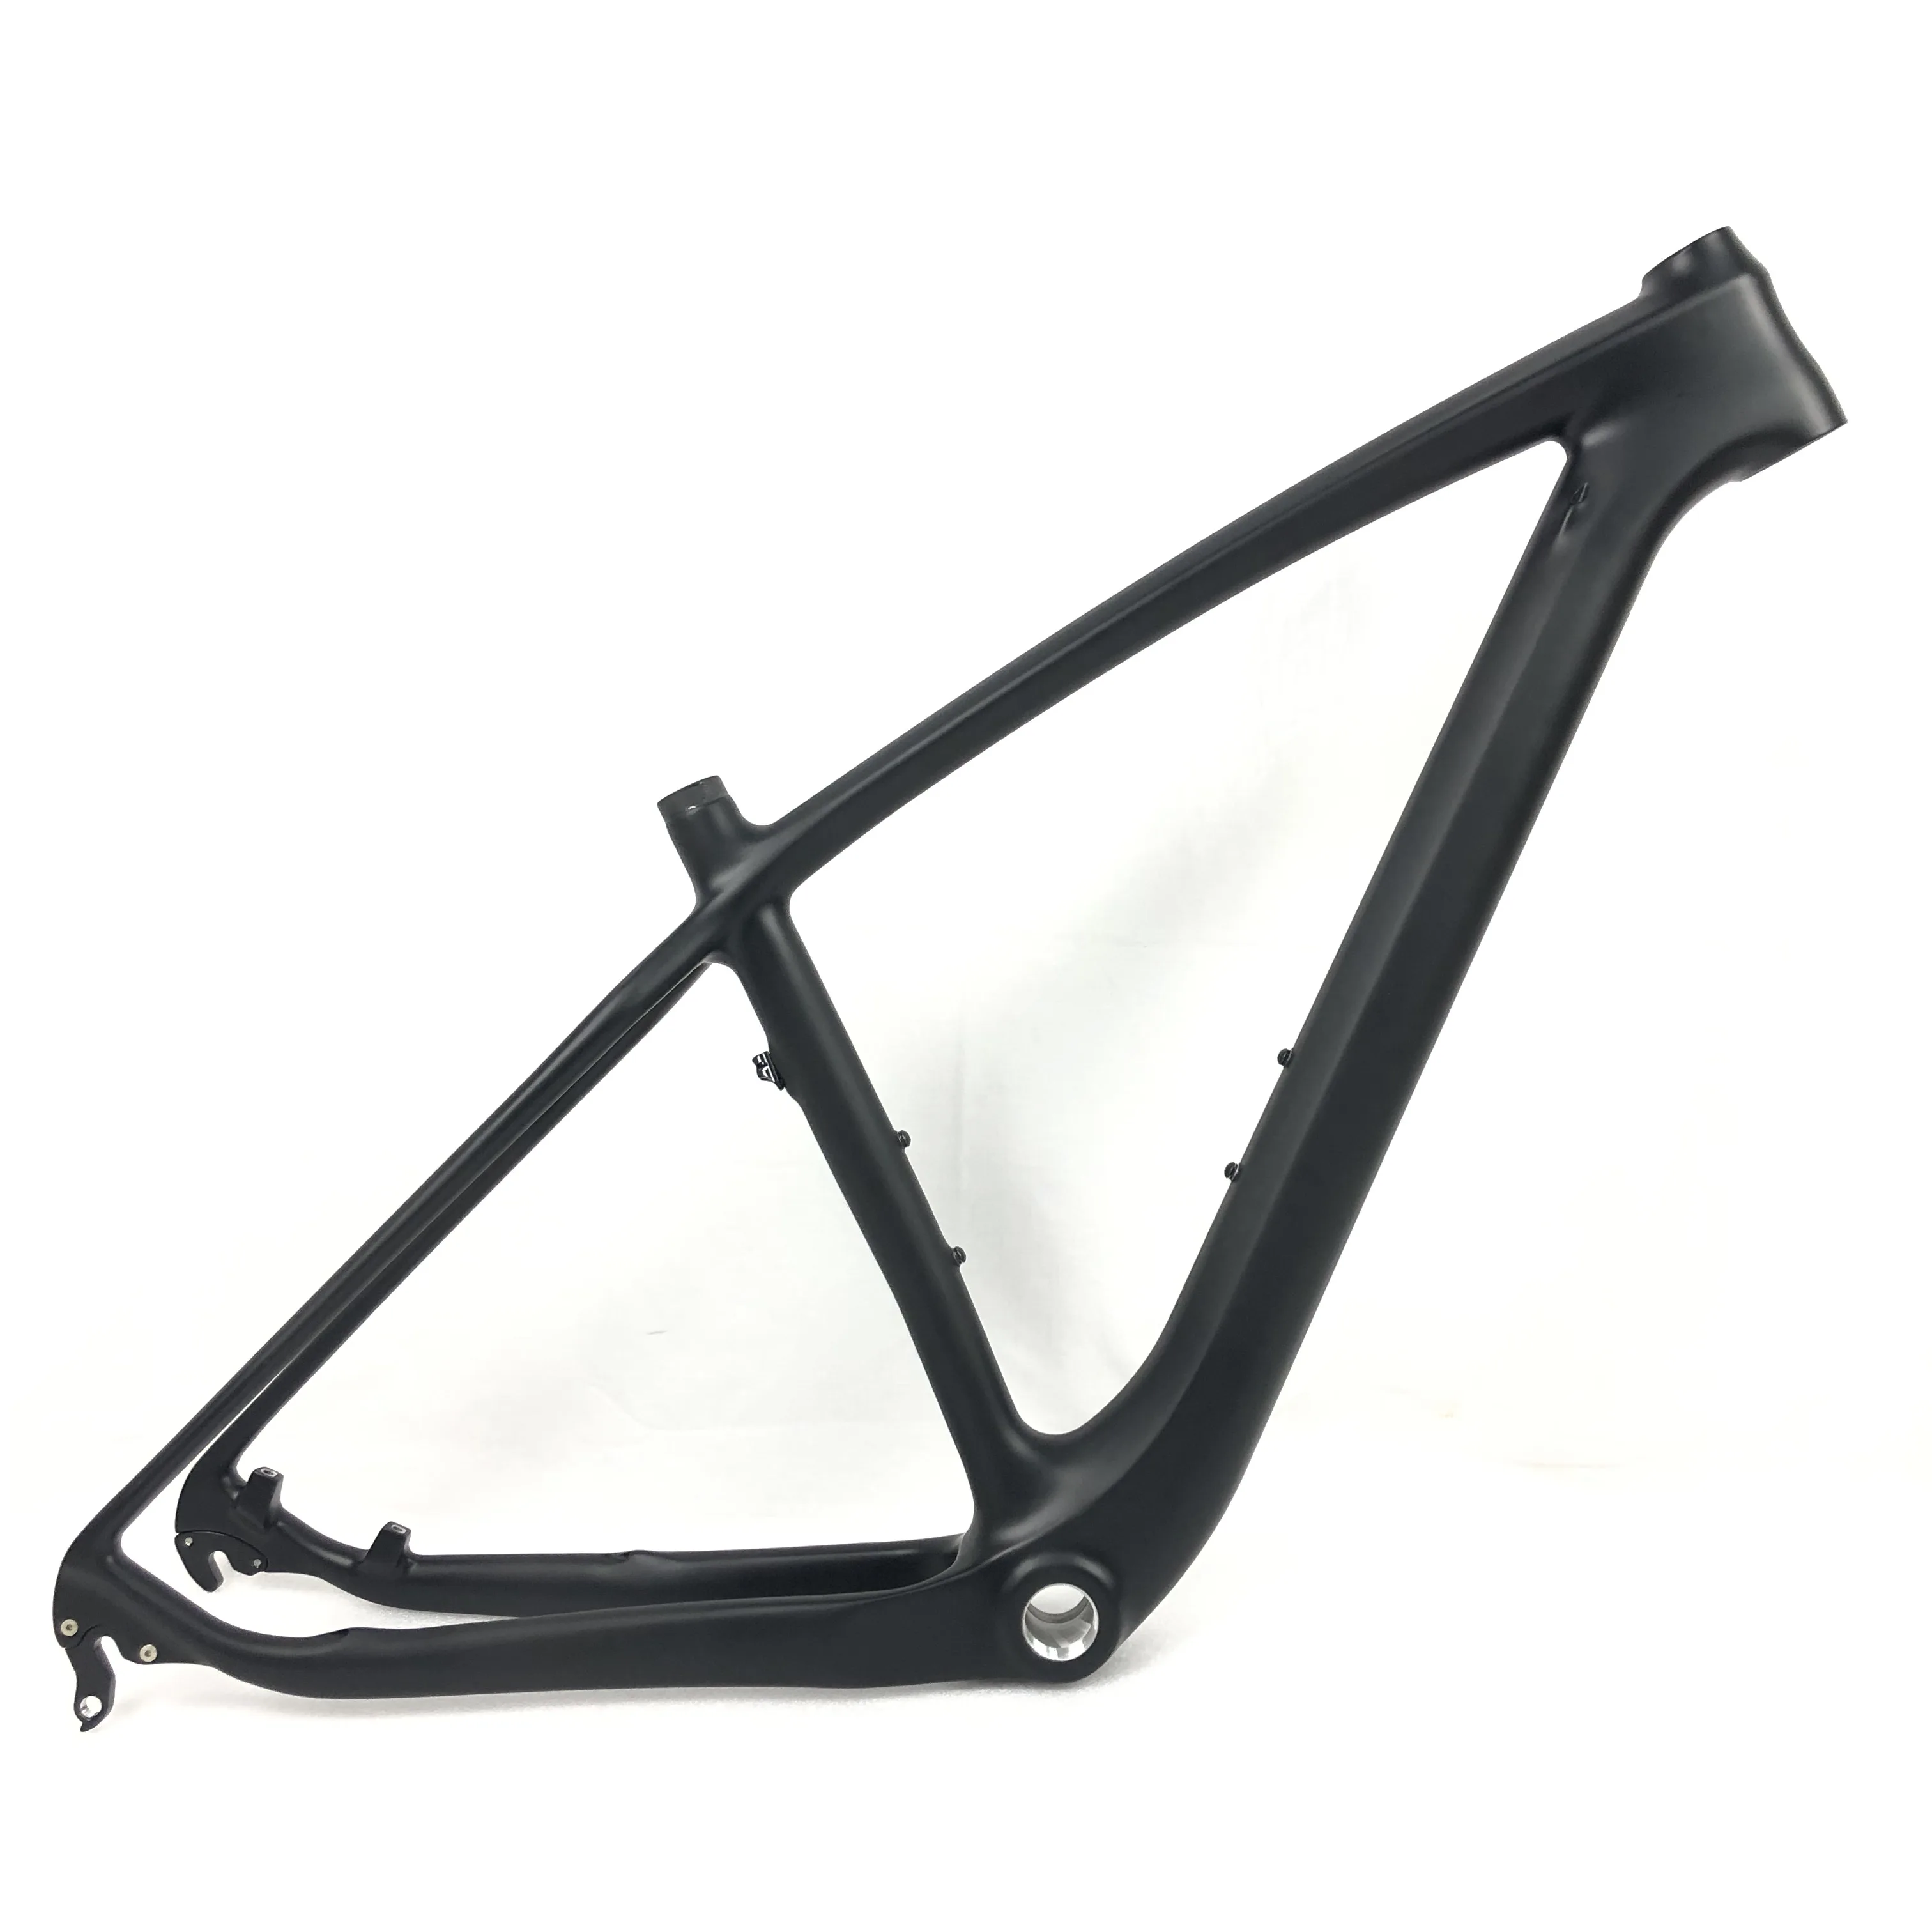 Lightcarbon Mtb Bike Frame Carbon 29 Inches Hardtail Mountain Bike Frame Oem Hf-fm056 - Buy Mtb Bike,29 Inches Hardtail Mountain Bike,Carbon Mtb Product on